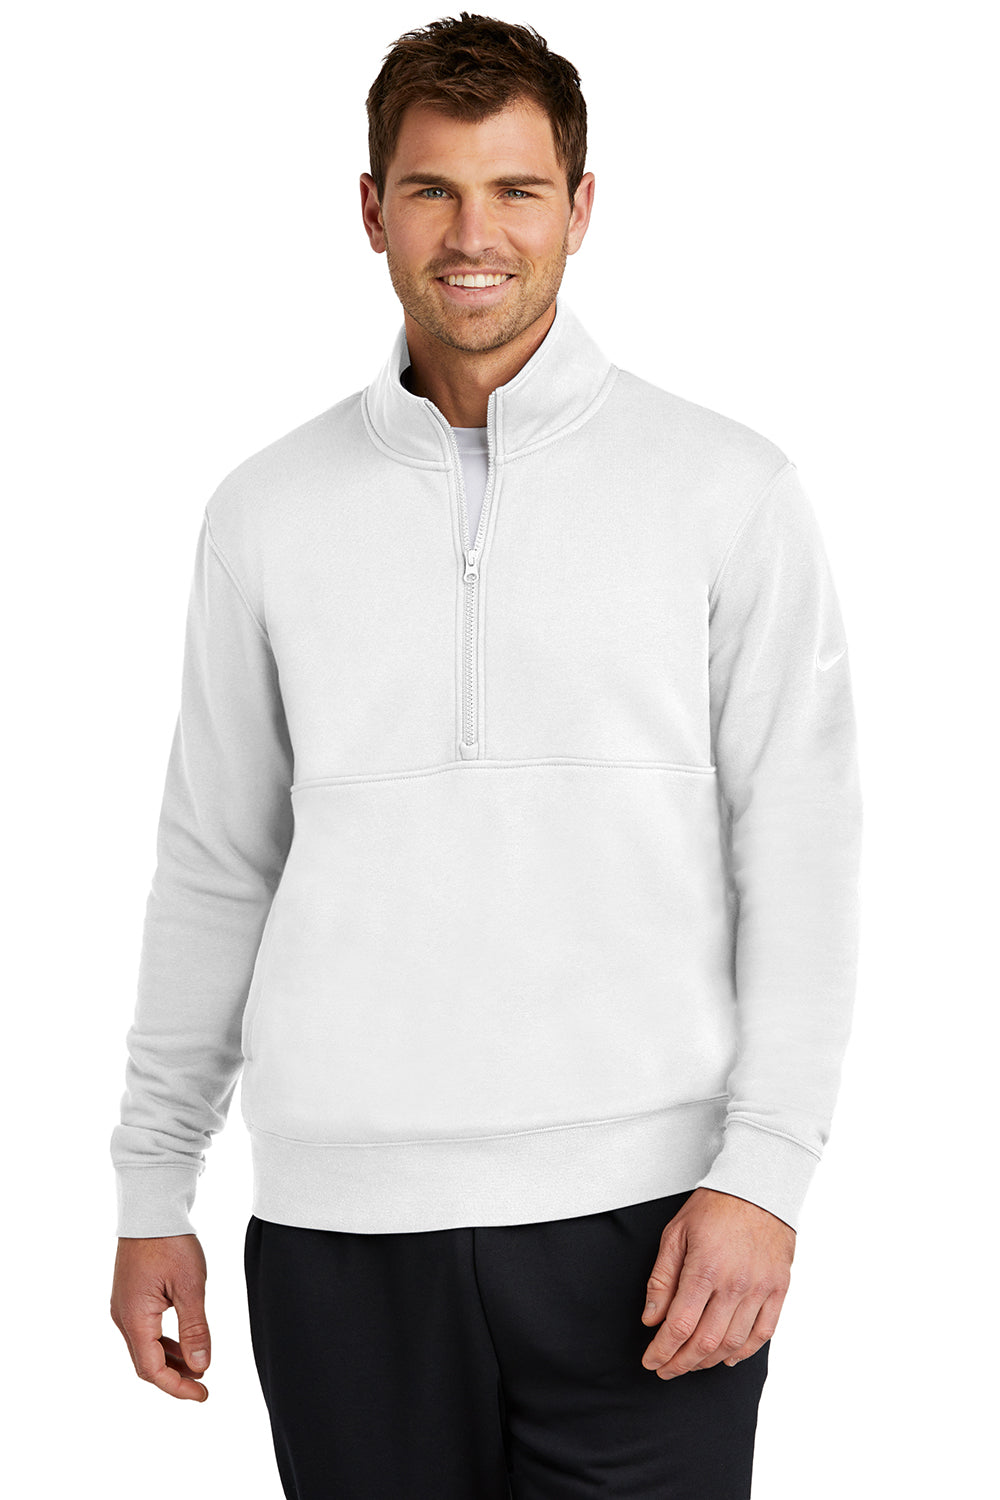 Nike NKDX6718 Mens Club Fleece 1/4 Zip Sweatshirt White Model Front